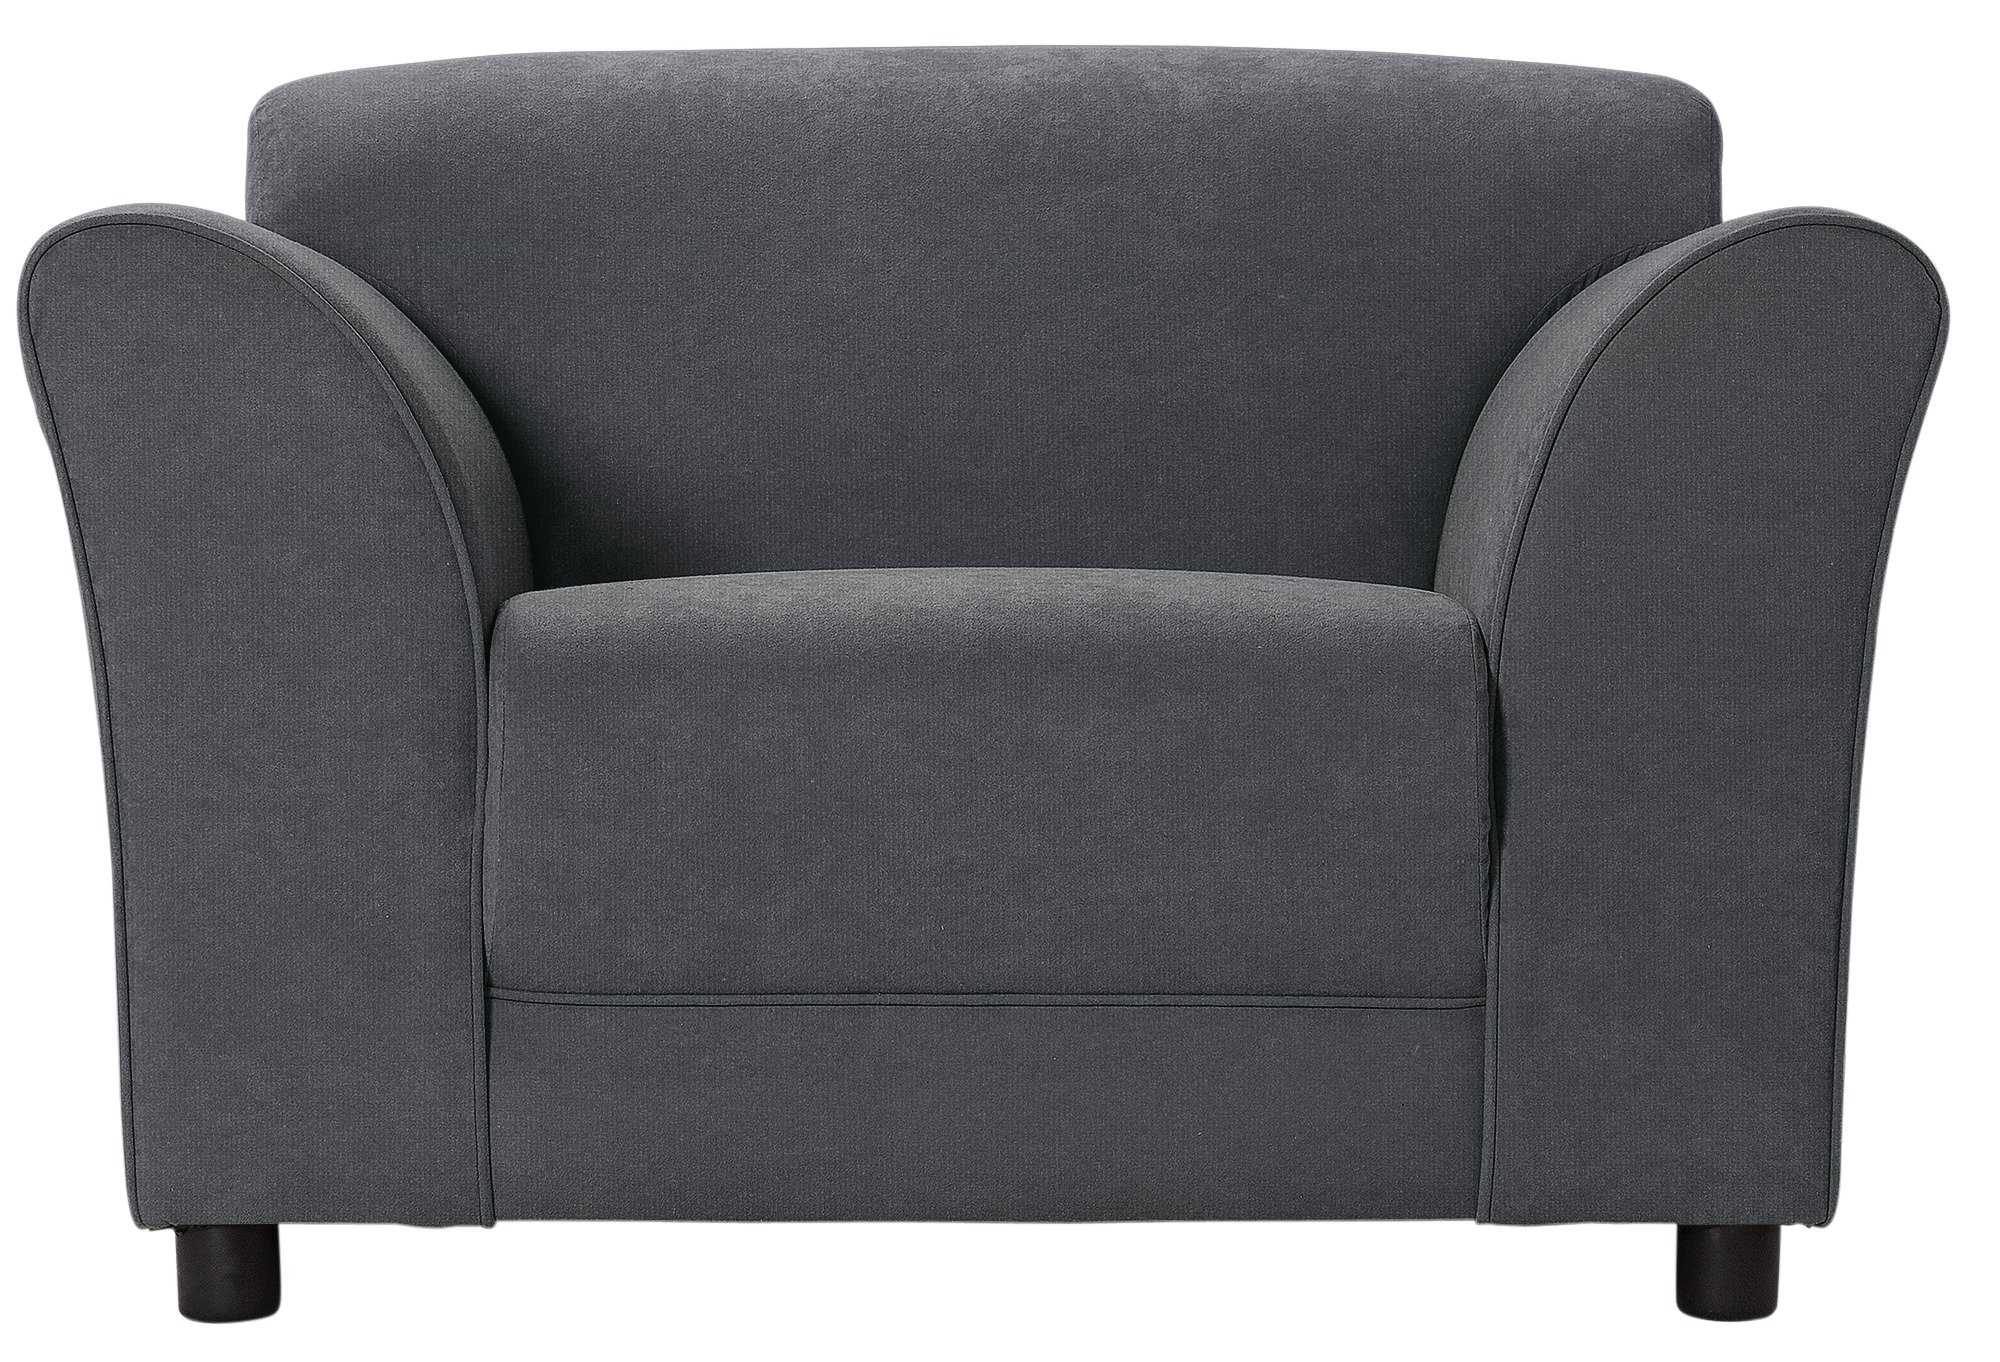 Argos Home Jenna Fabric Chair - Charcoal